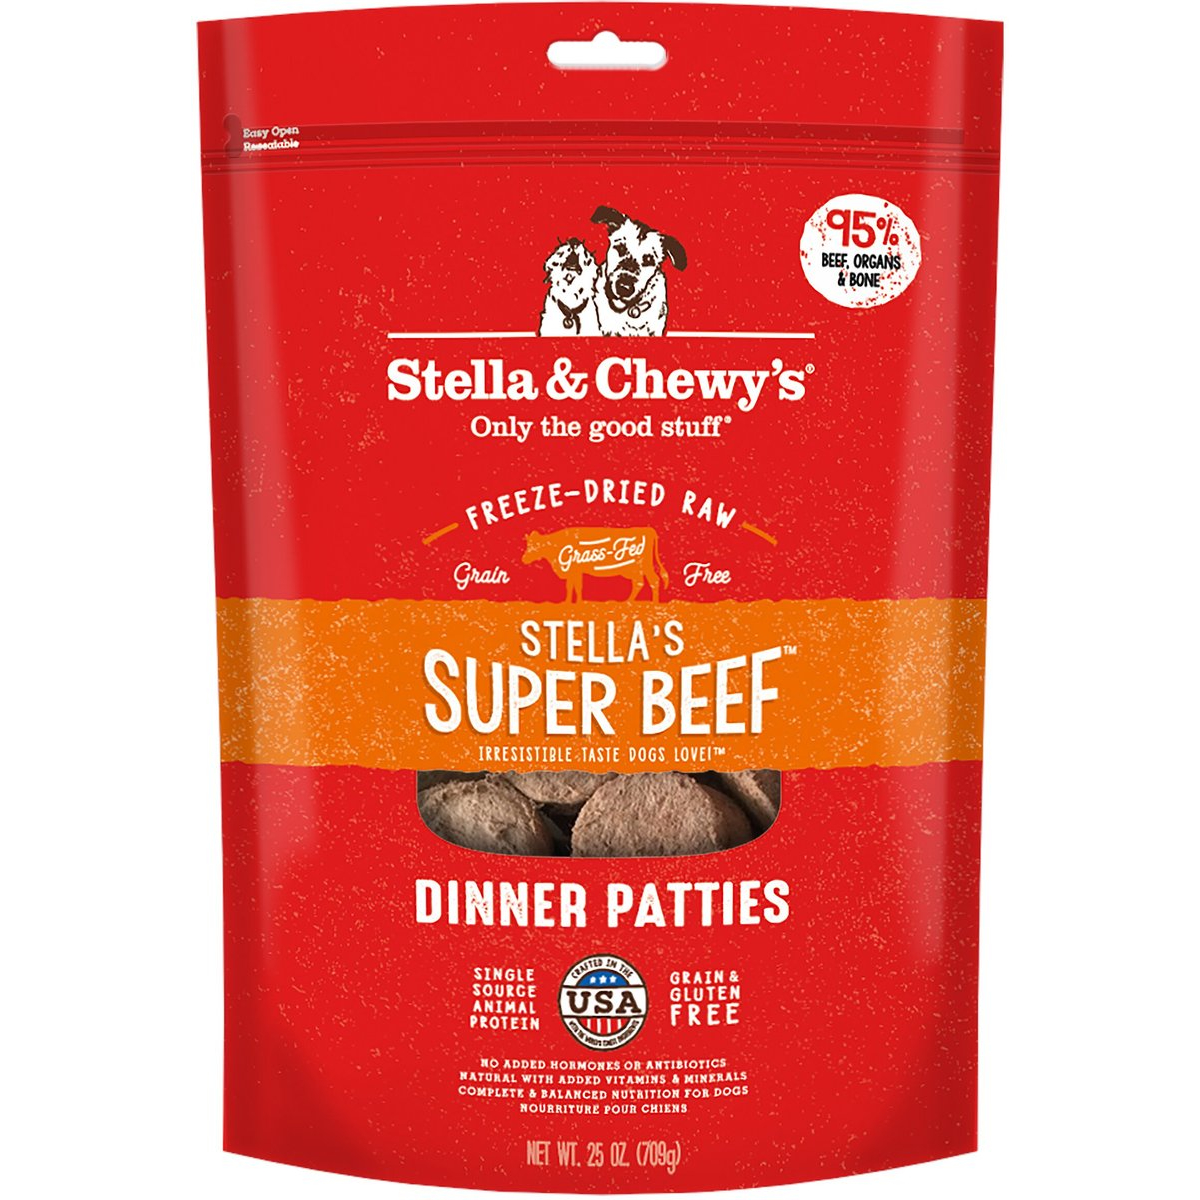 Stella & Chewy's Stella's Super Beef Freeze-Dried Raw Food